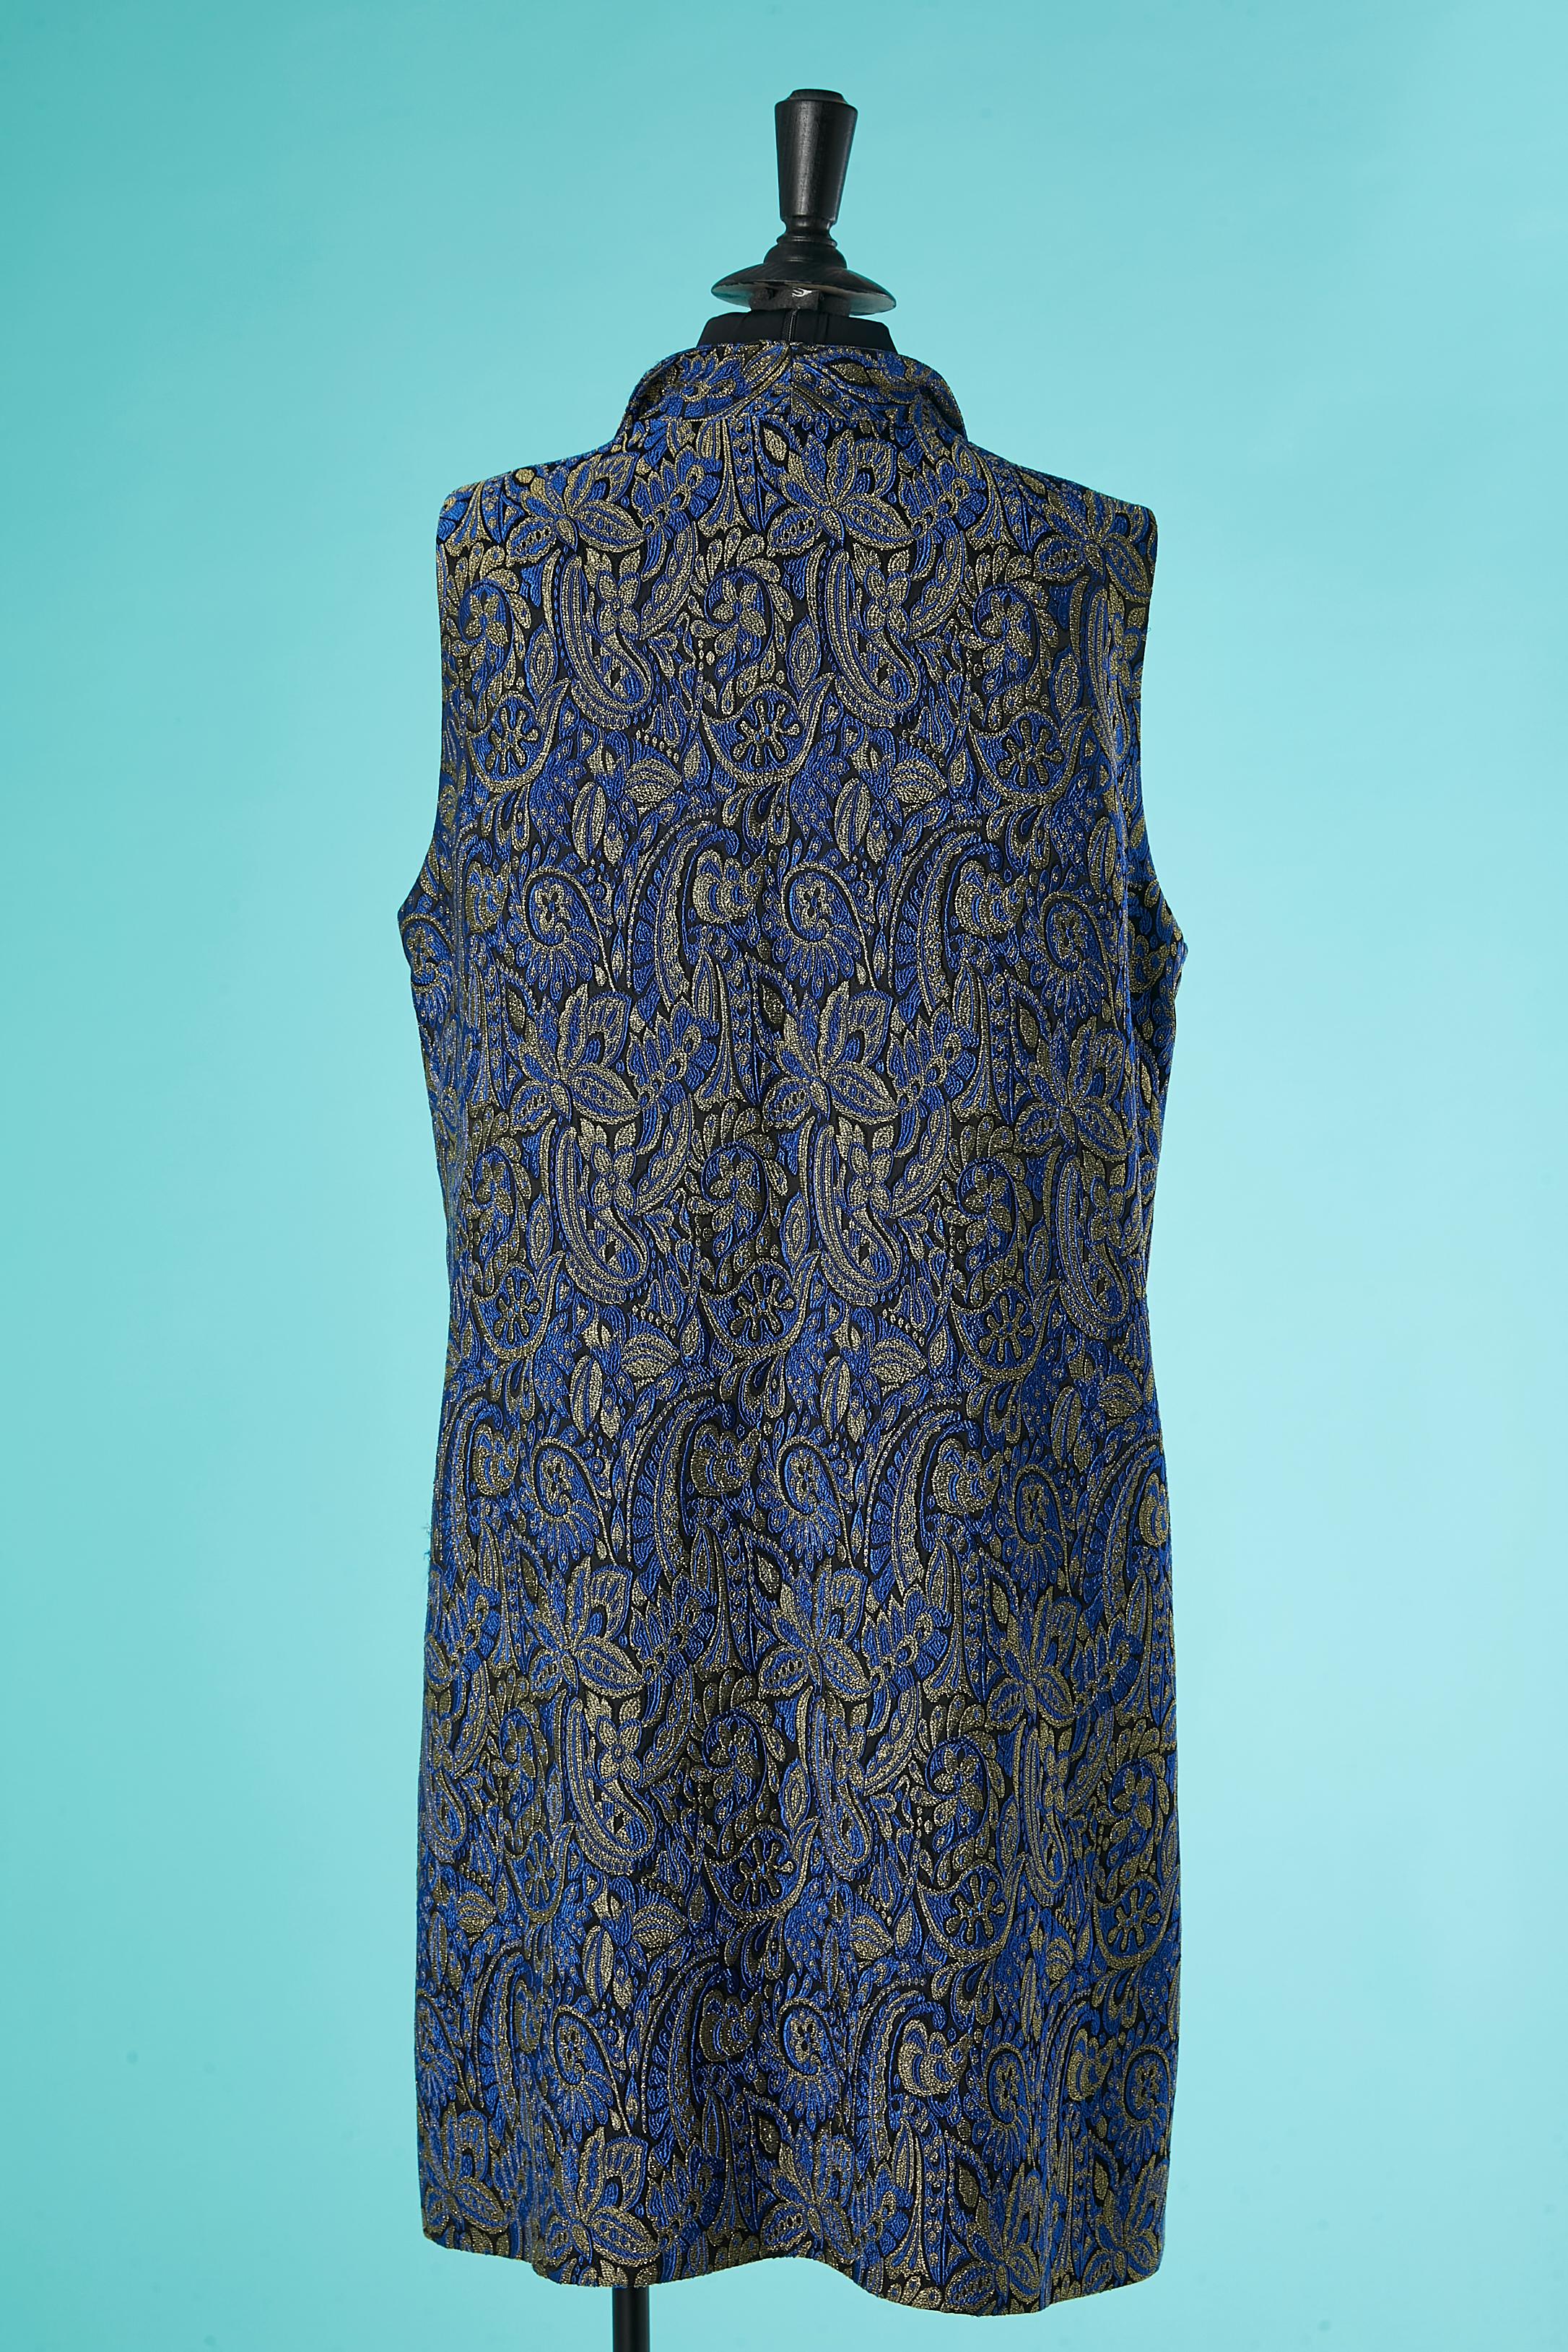 Sleeveless Paisley brocade vest Yves Saint Laurent Variation Circa 1980's  For Sale 1